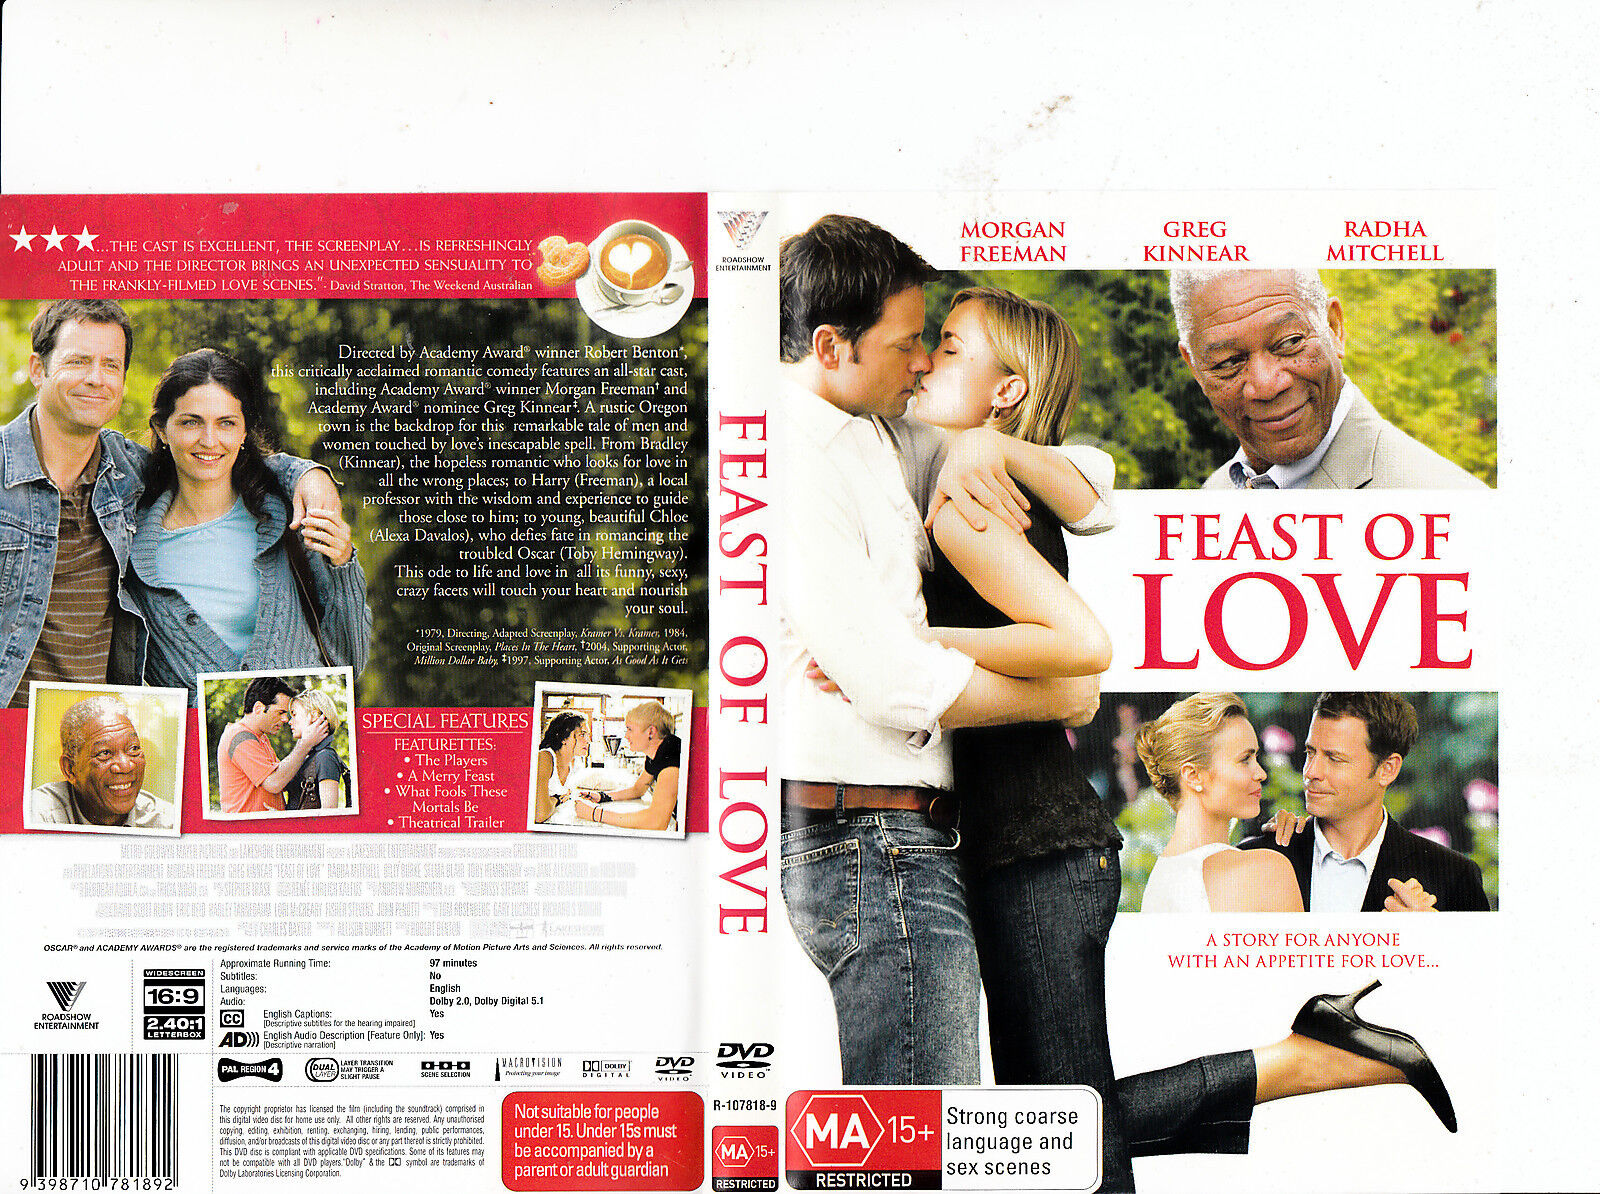 Feast Of Love (2007) Morgan Freeman